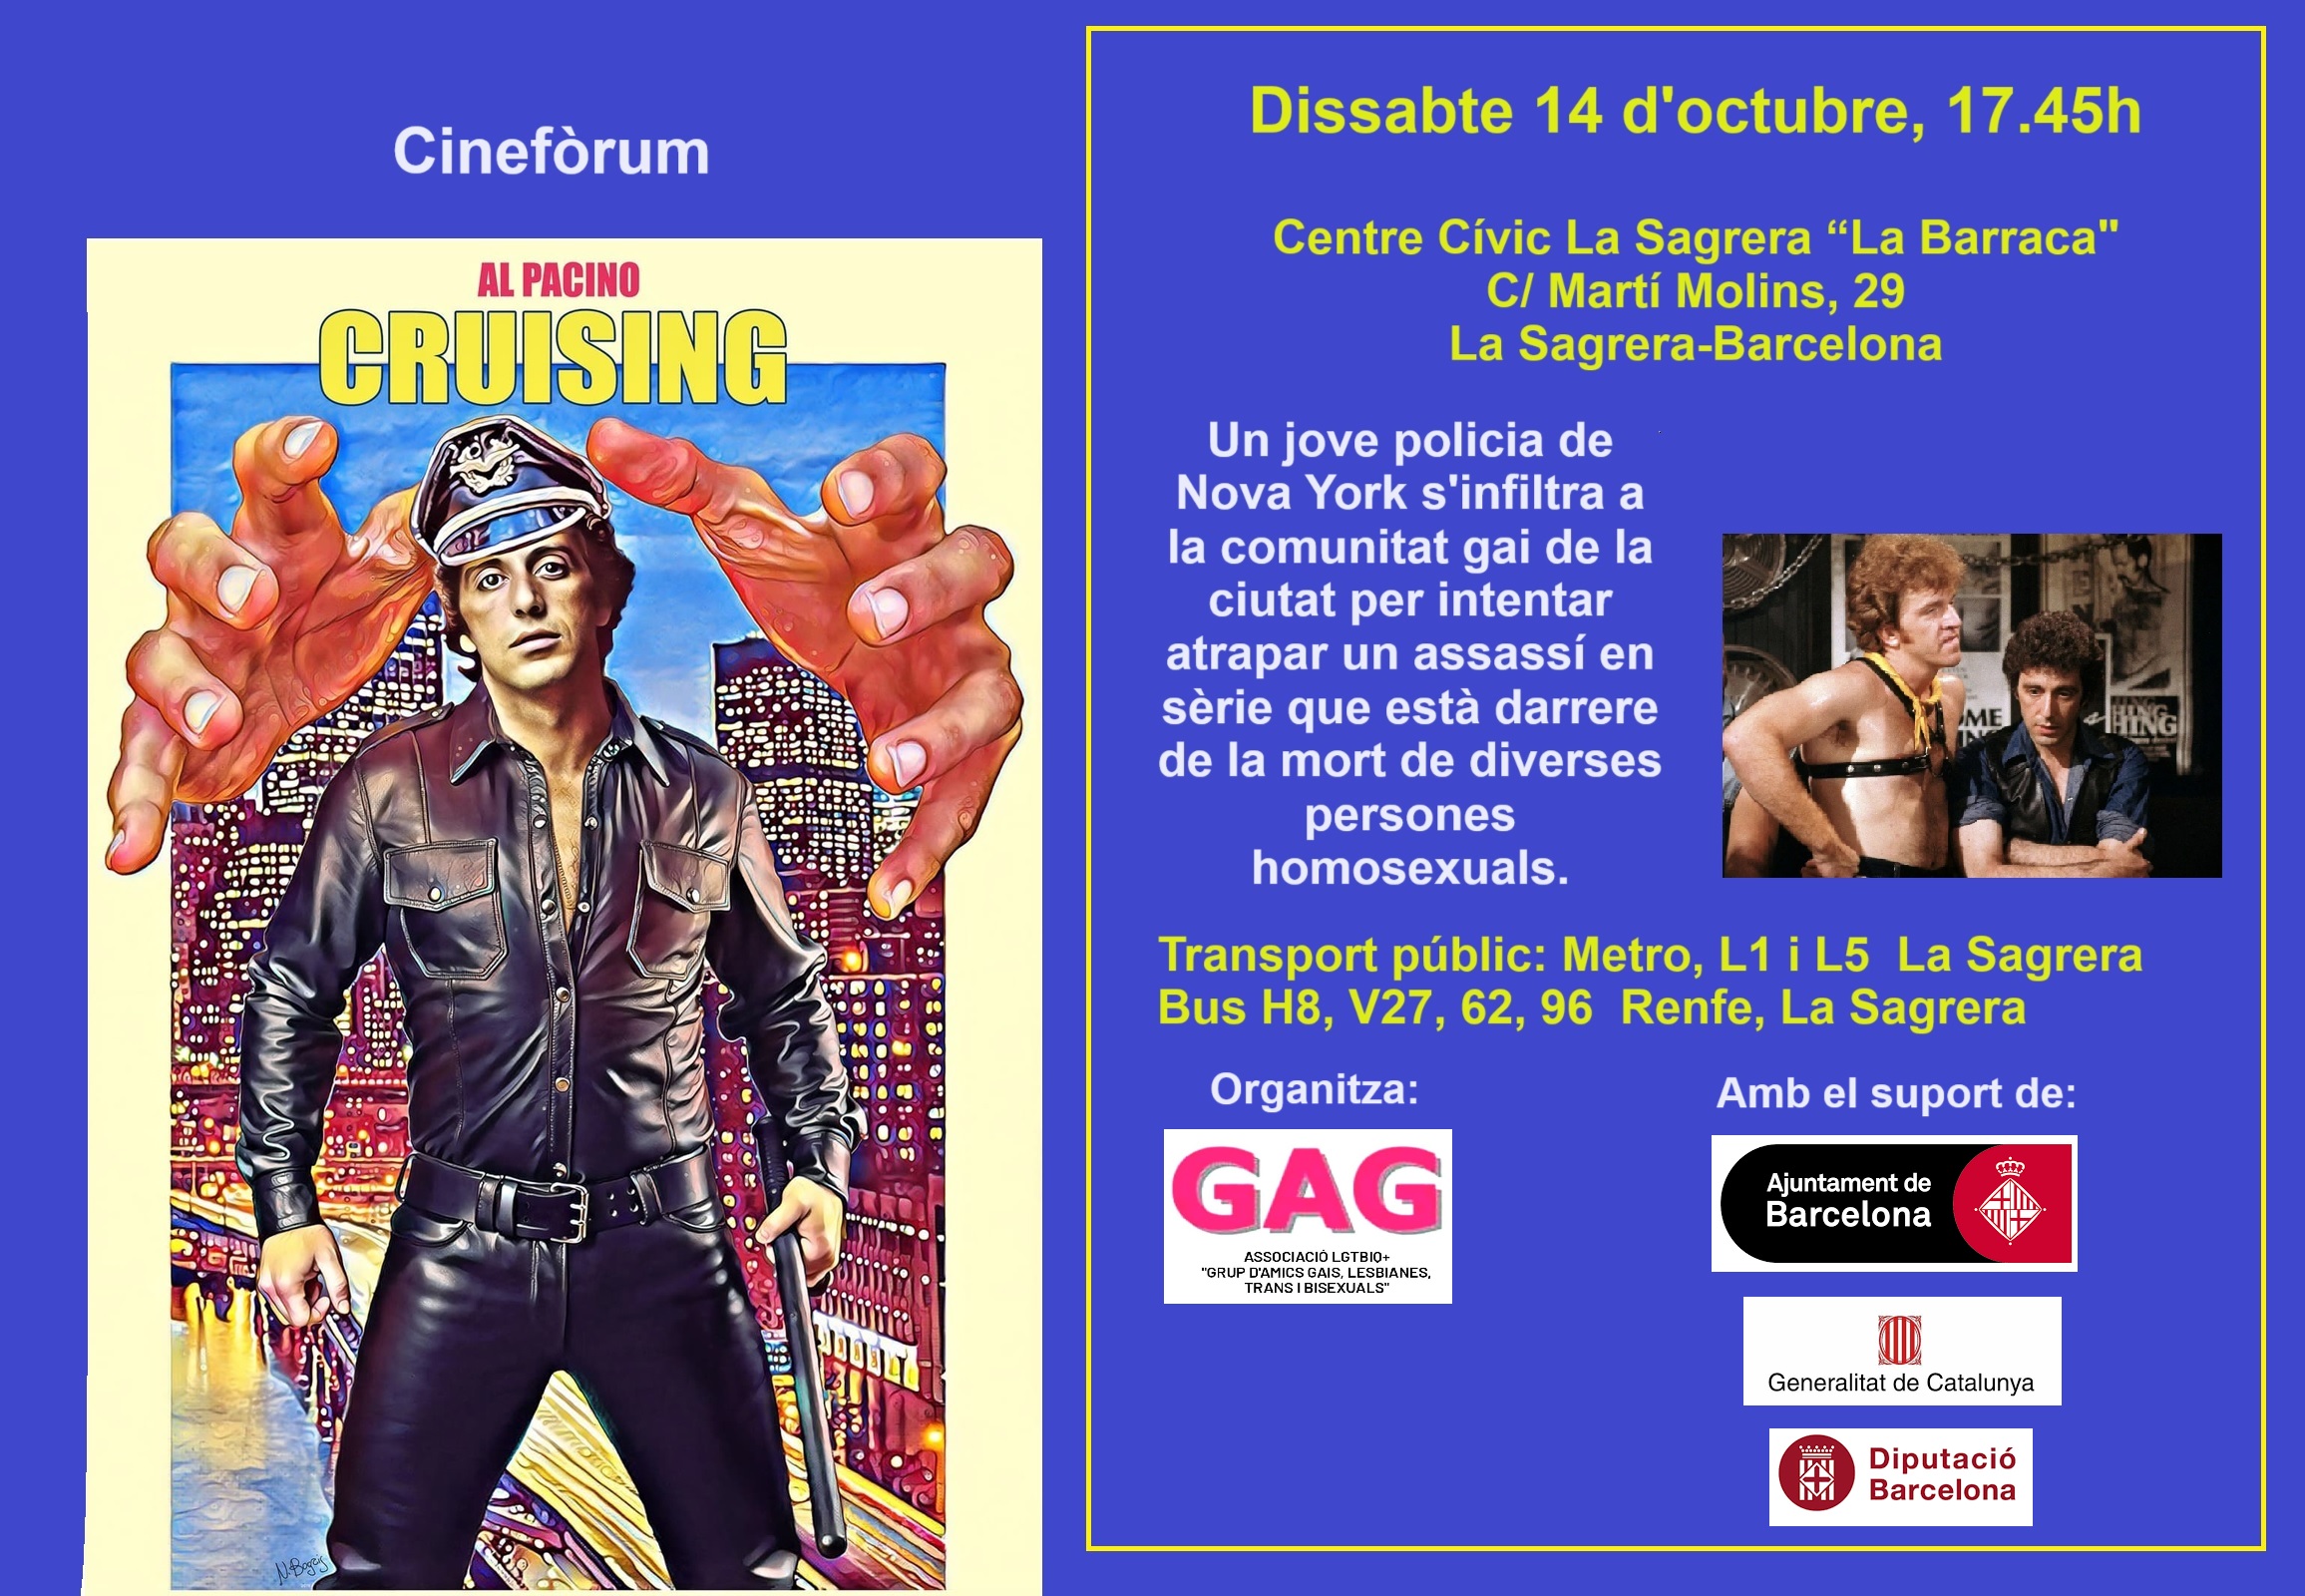 Dissabte 14 d’octubre, 17.45h. Cineforum: “CRUISING”